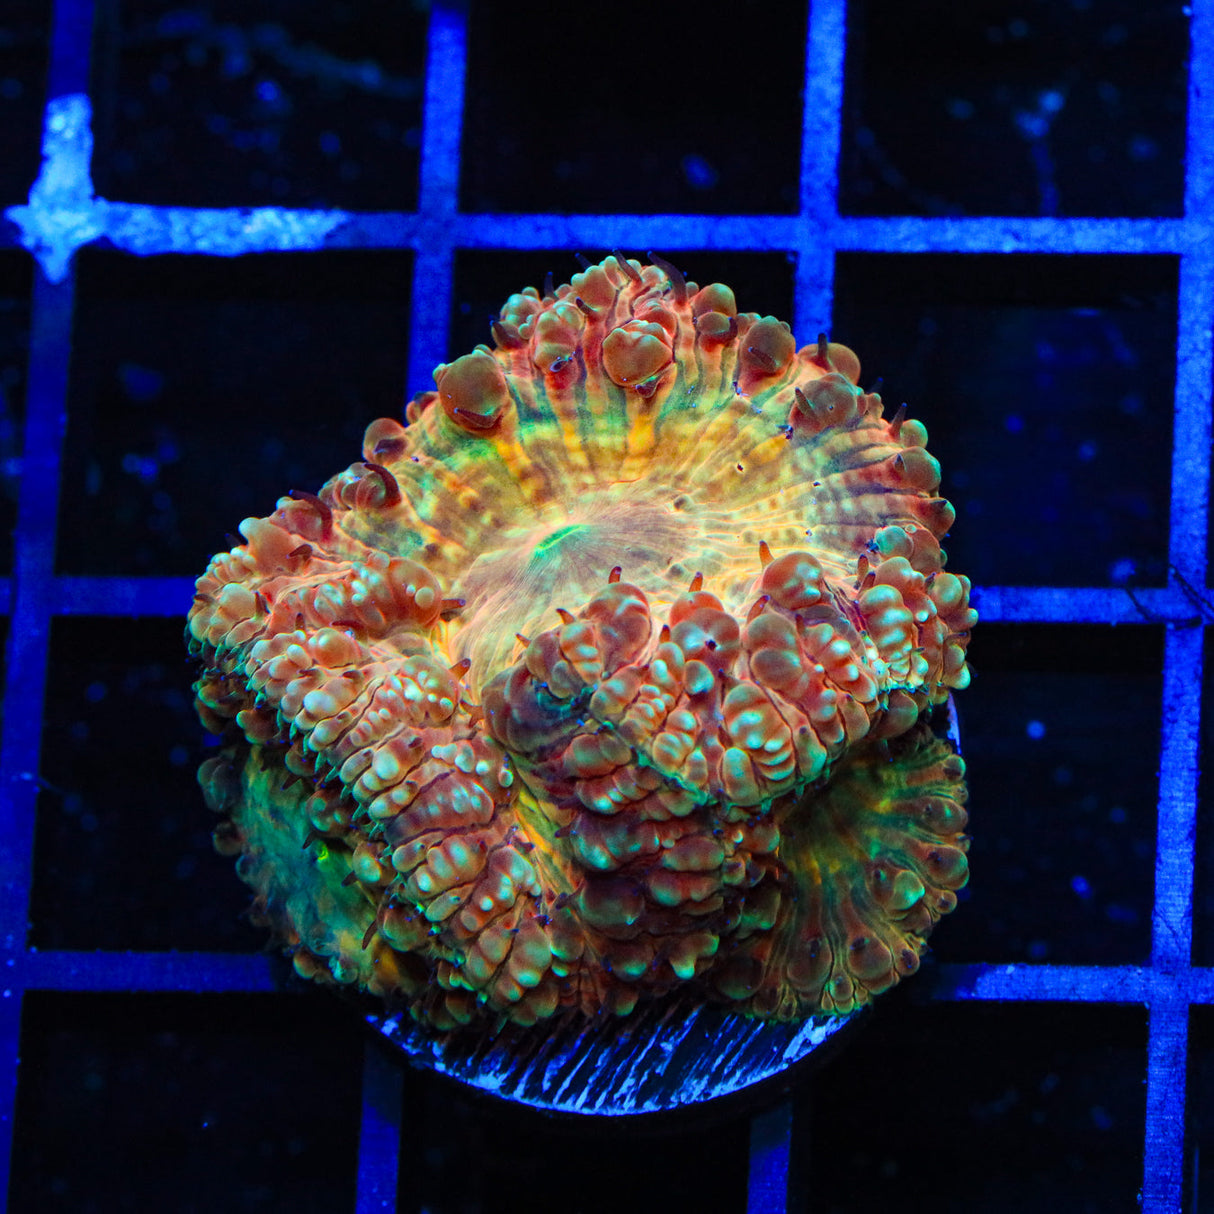 Candy Apple Blastomussa Coral - Top Shelf Aquatics